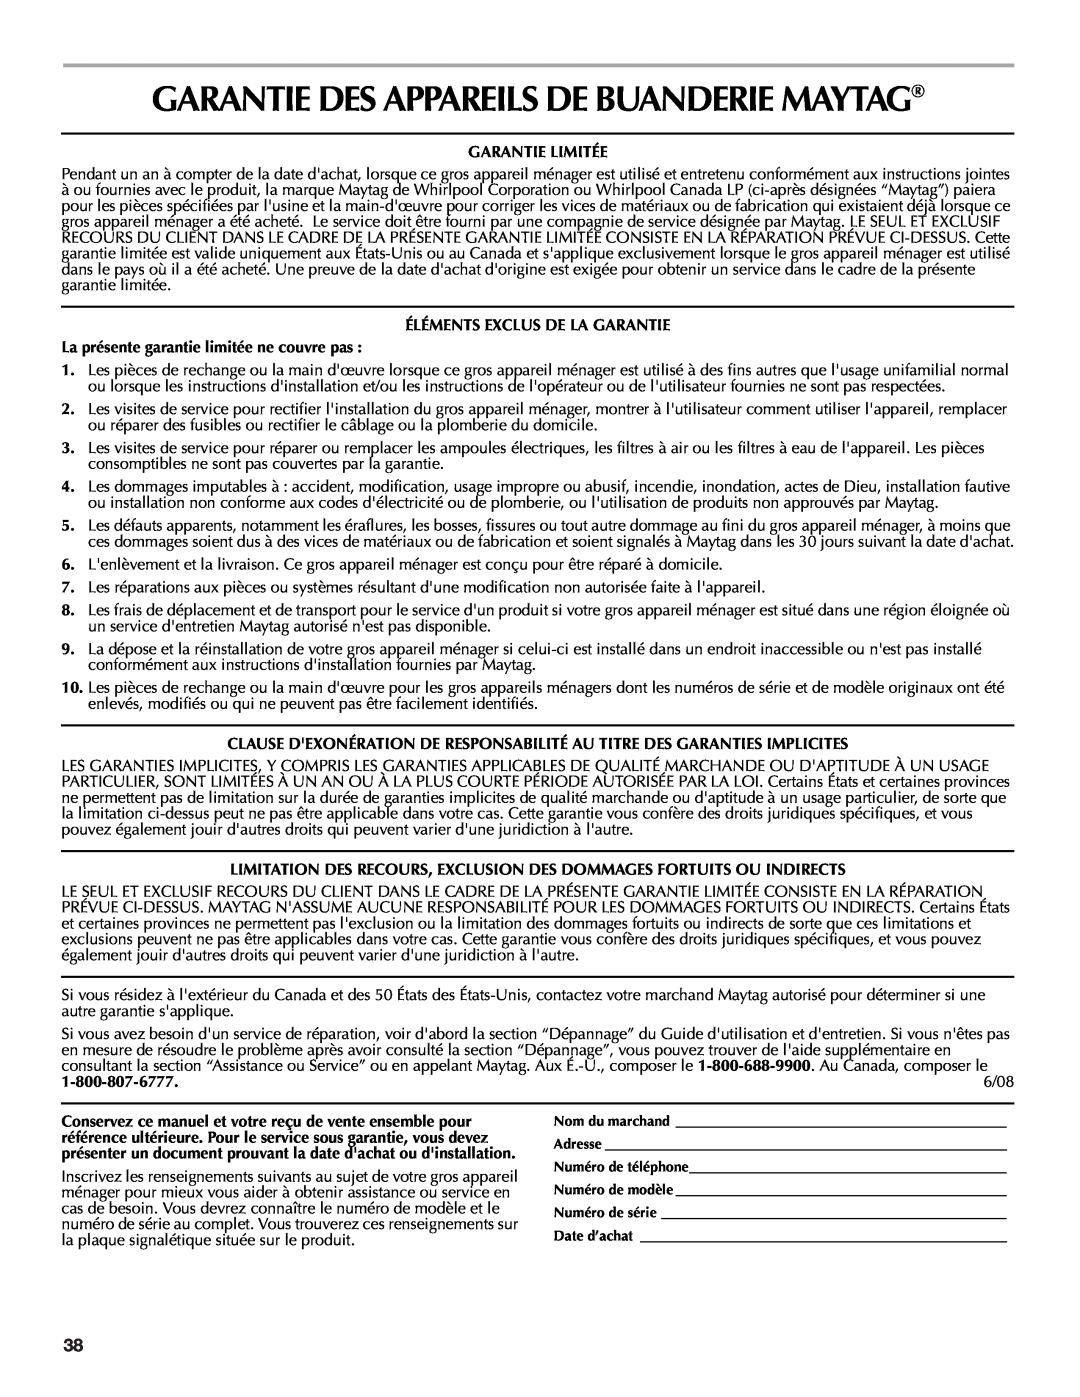 Maytag W10385090A manual Garantie Des Appareils De Buanderie Maytag, Garantie Limitée, Éléments Exclus De La Garantie, 6/08 